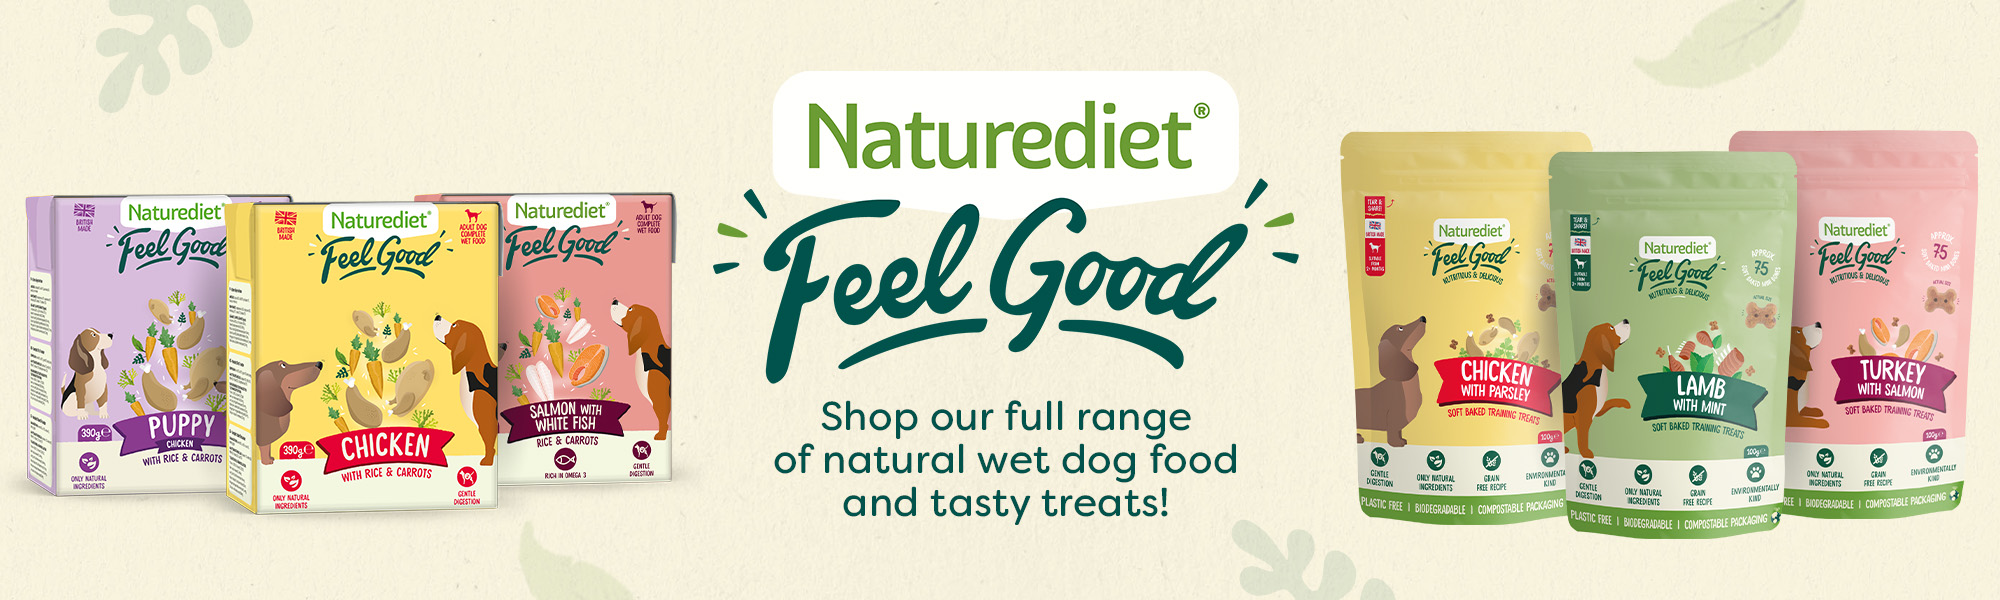 Naturediet Natural Dog Food and Treats